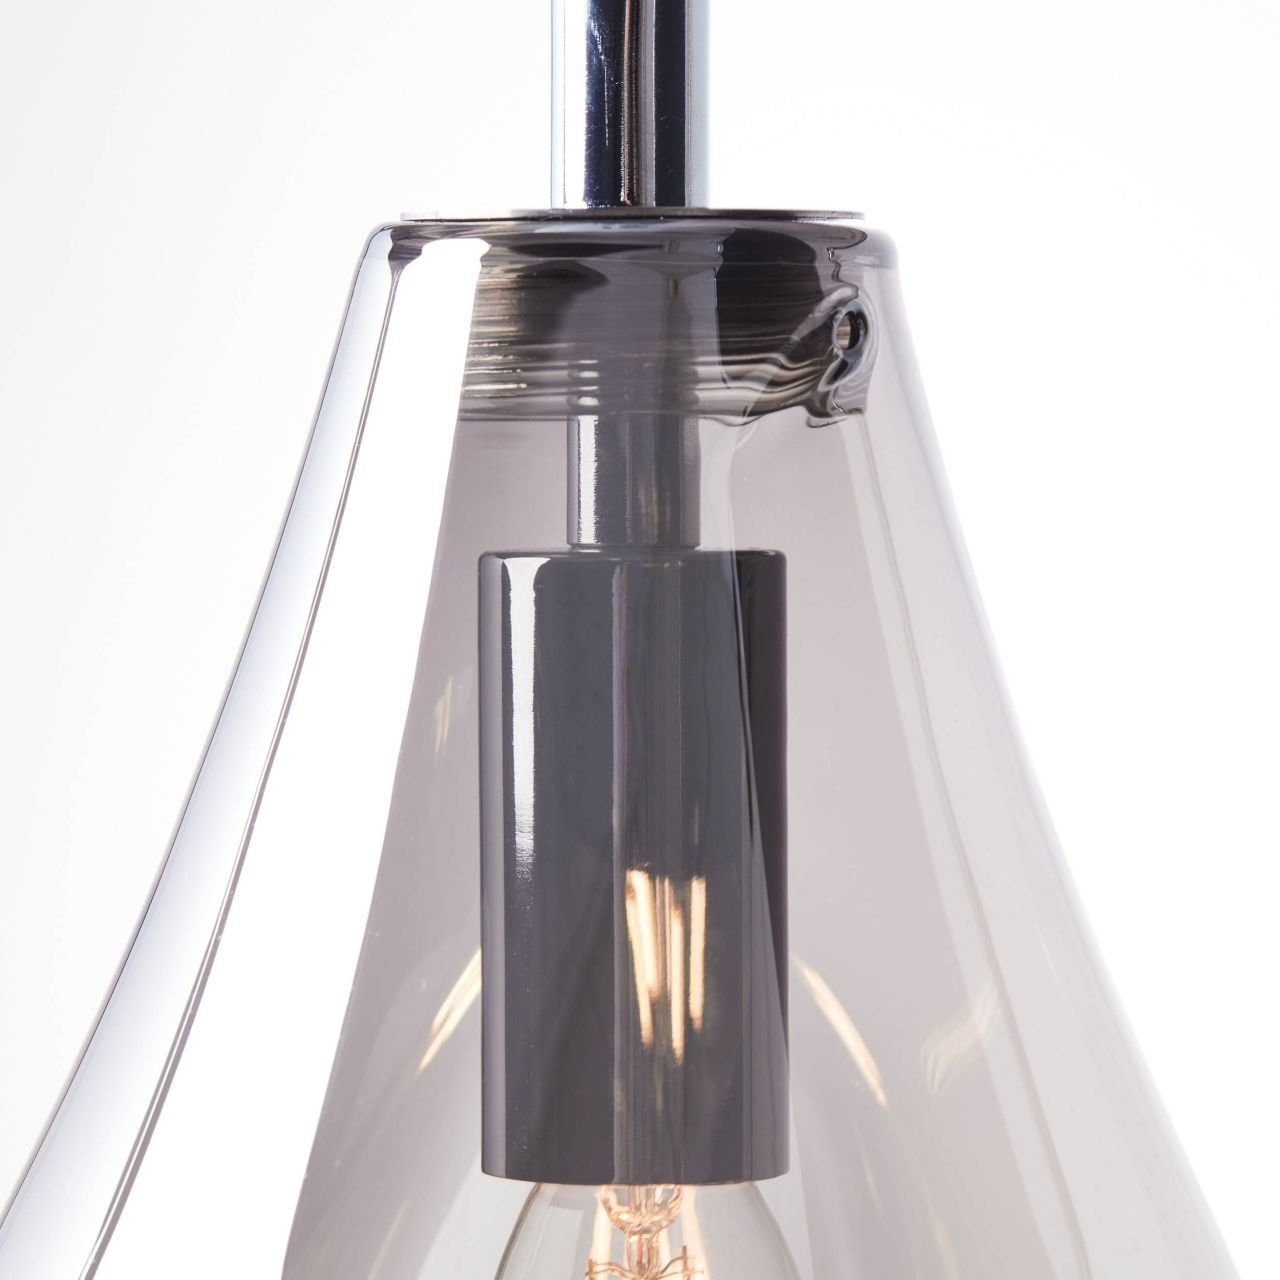 Glas/Metall, D45 Drops, Pendelleuchte rauchglas/chrom, 1x Drops 1flg Brilliant Lampe, Pendelleuchte